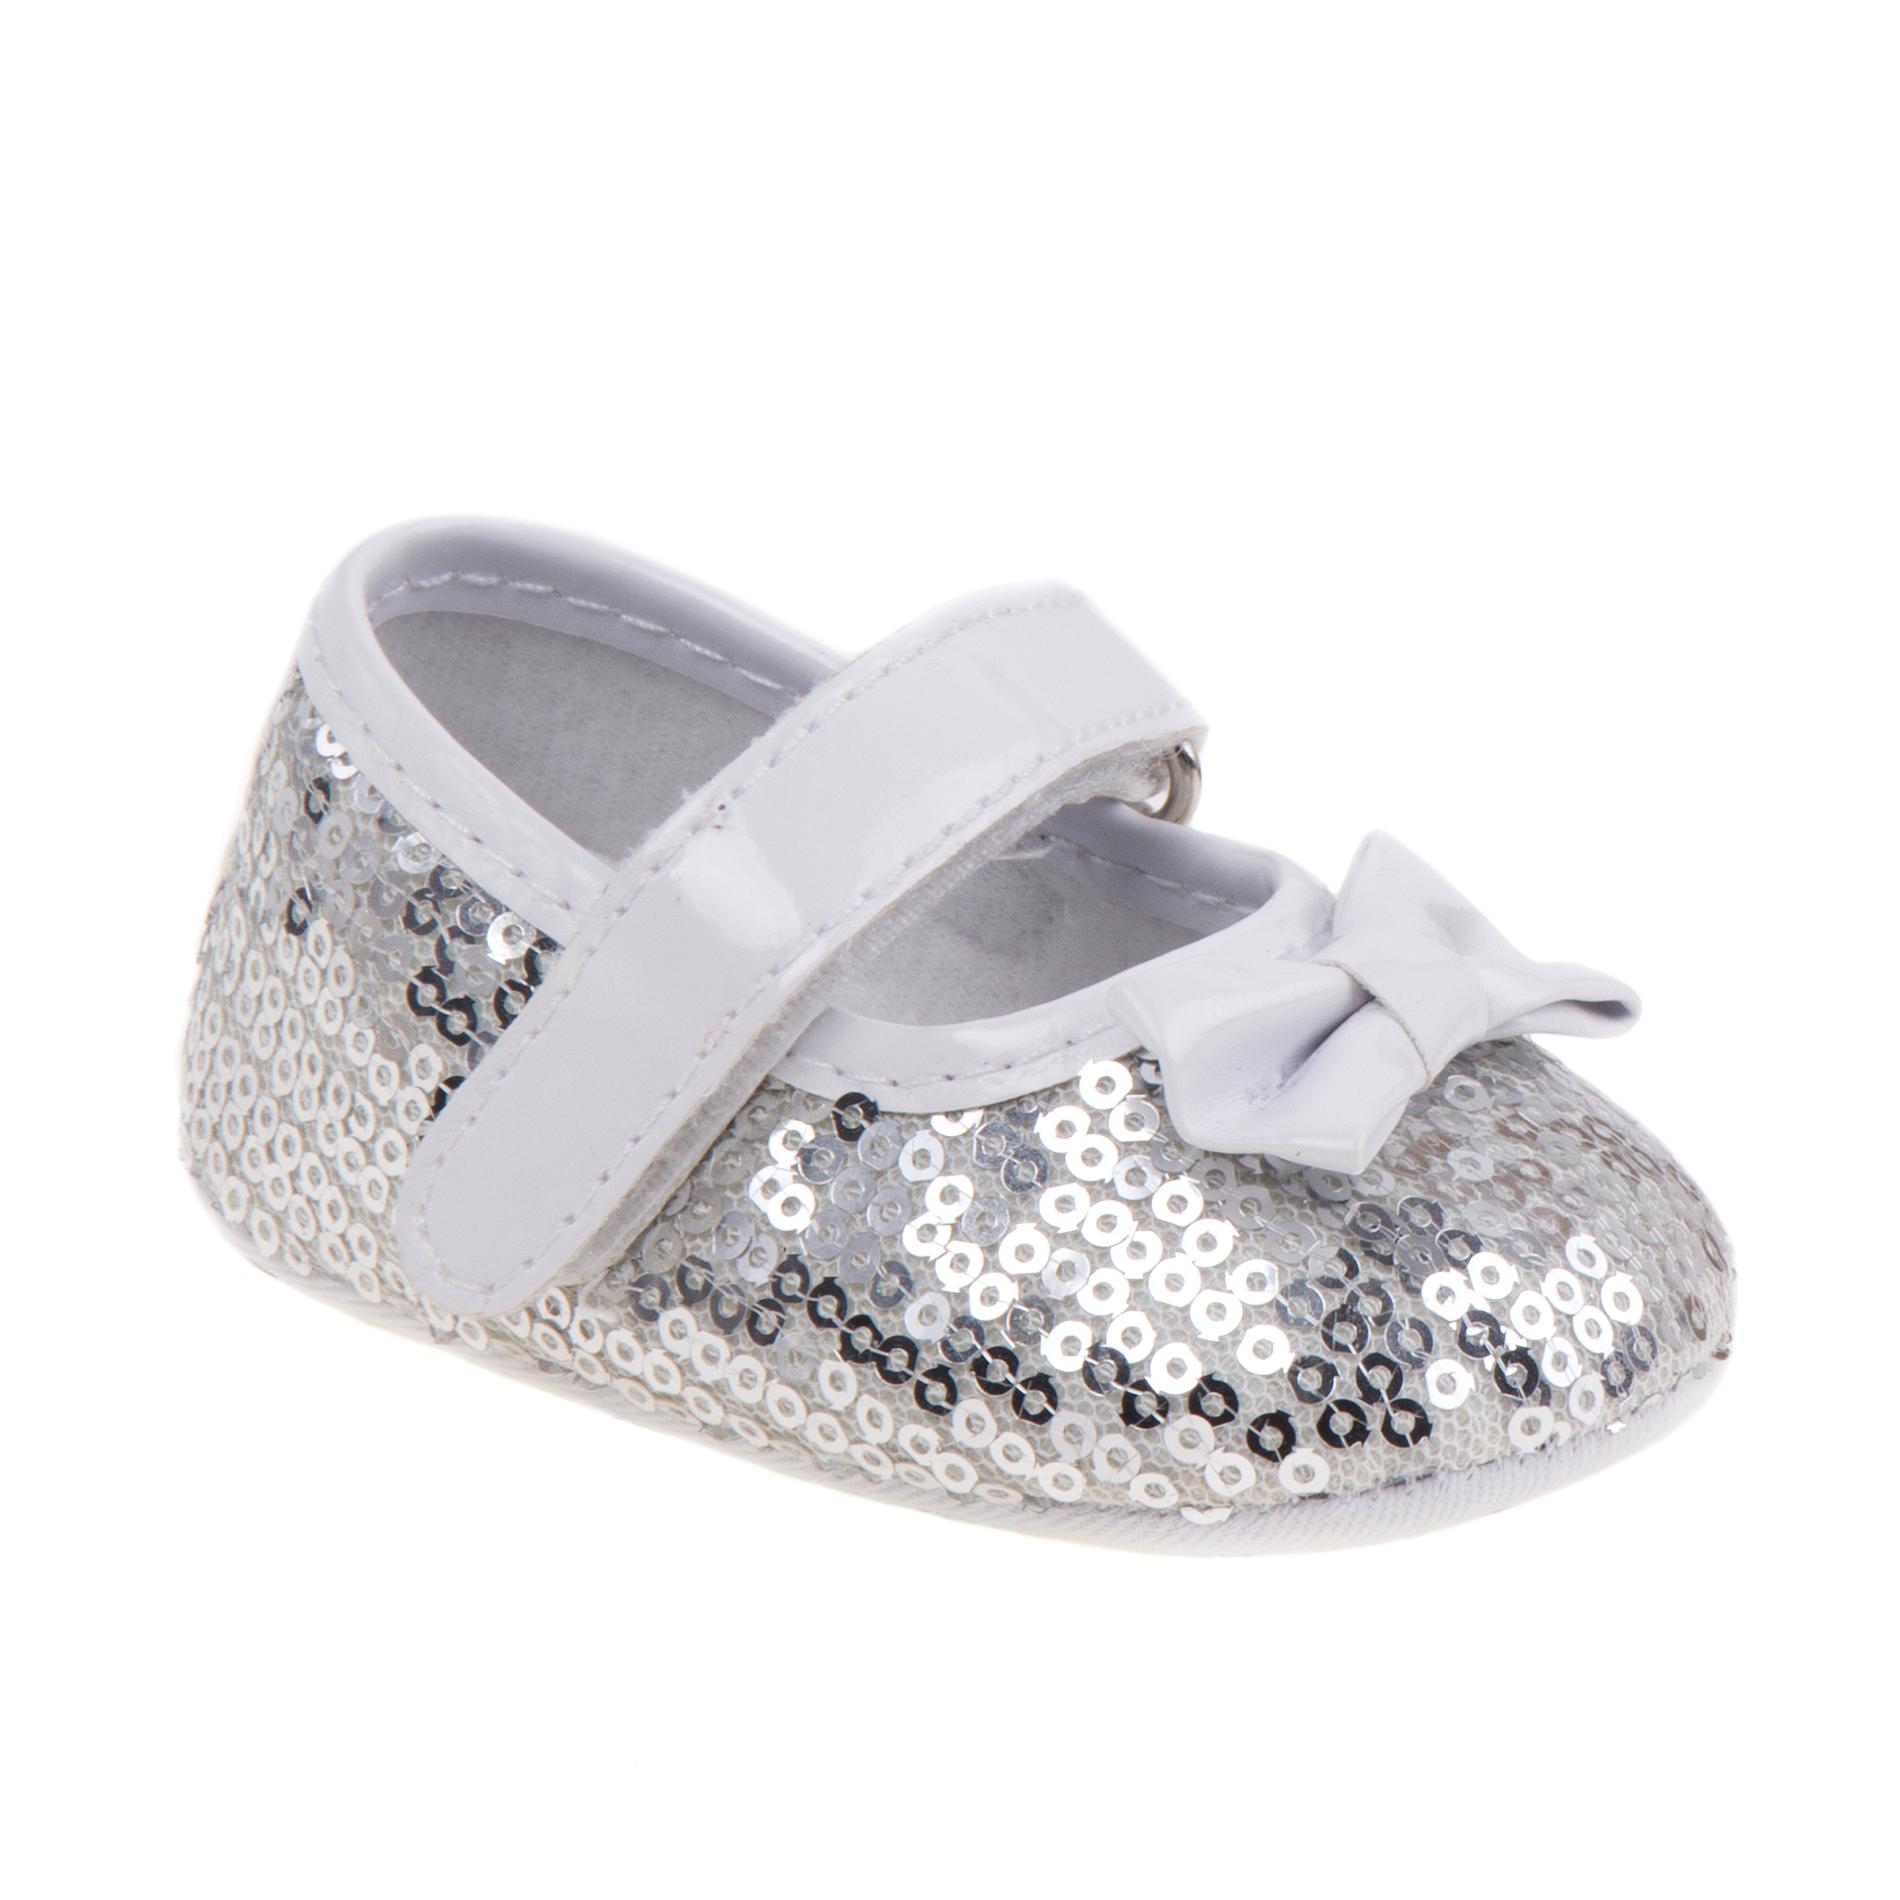 Laura Ashley Baby Girl's Silver Sequin Dress Crib Shoe